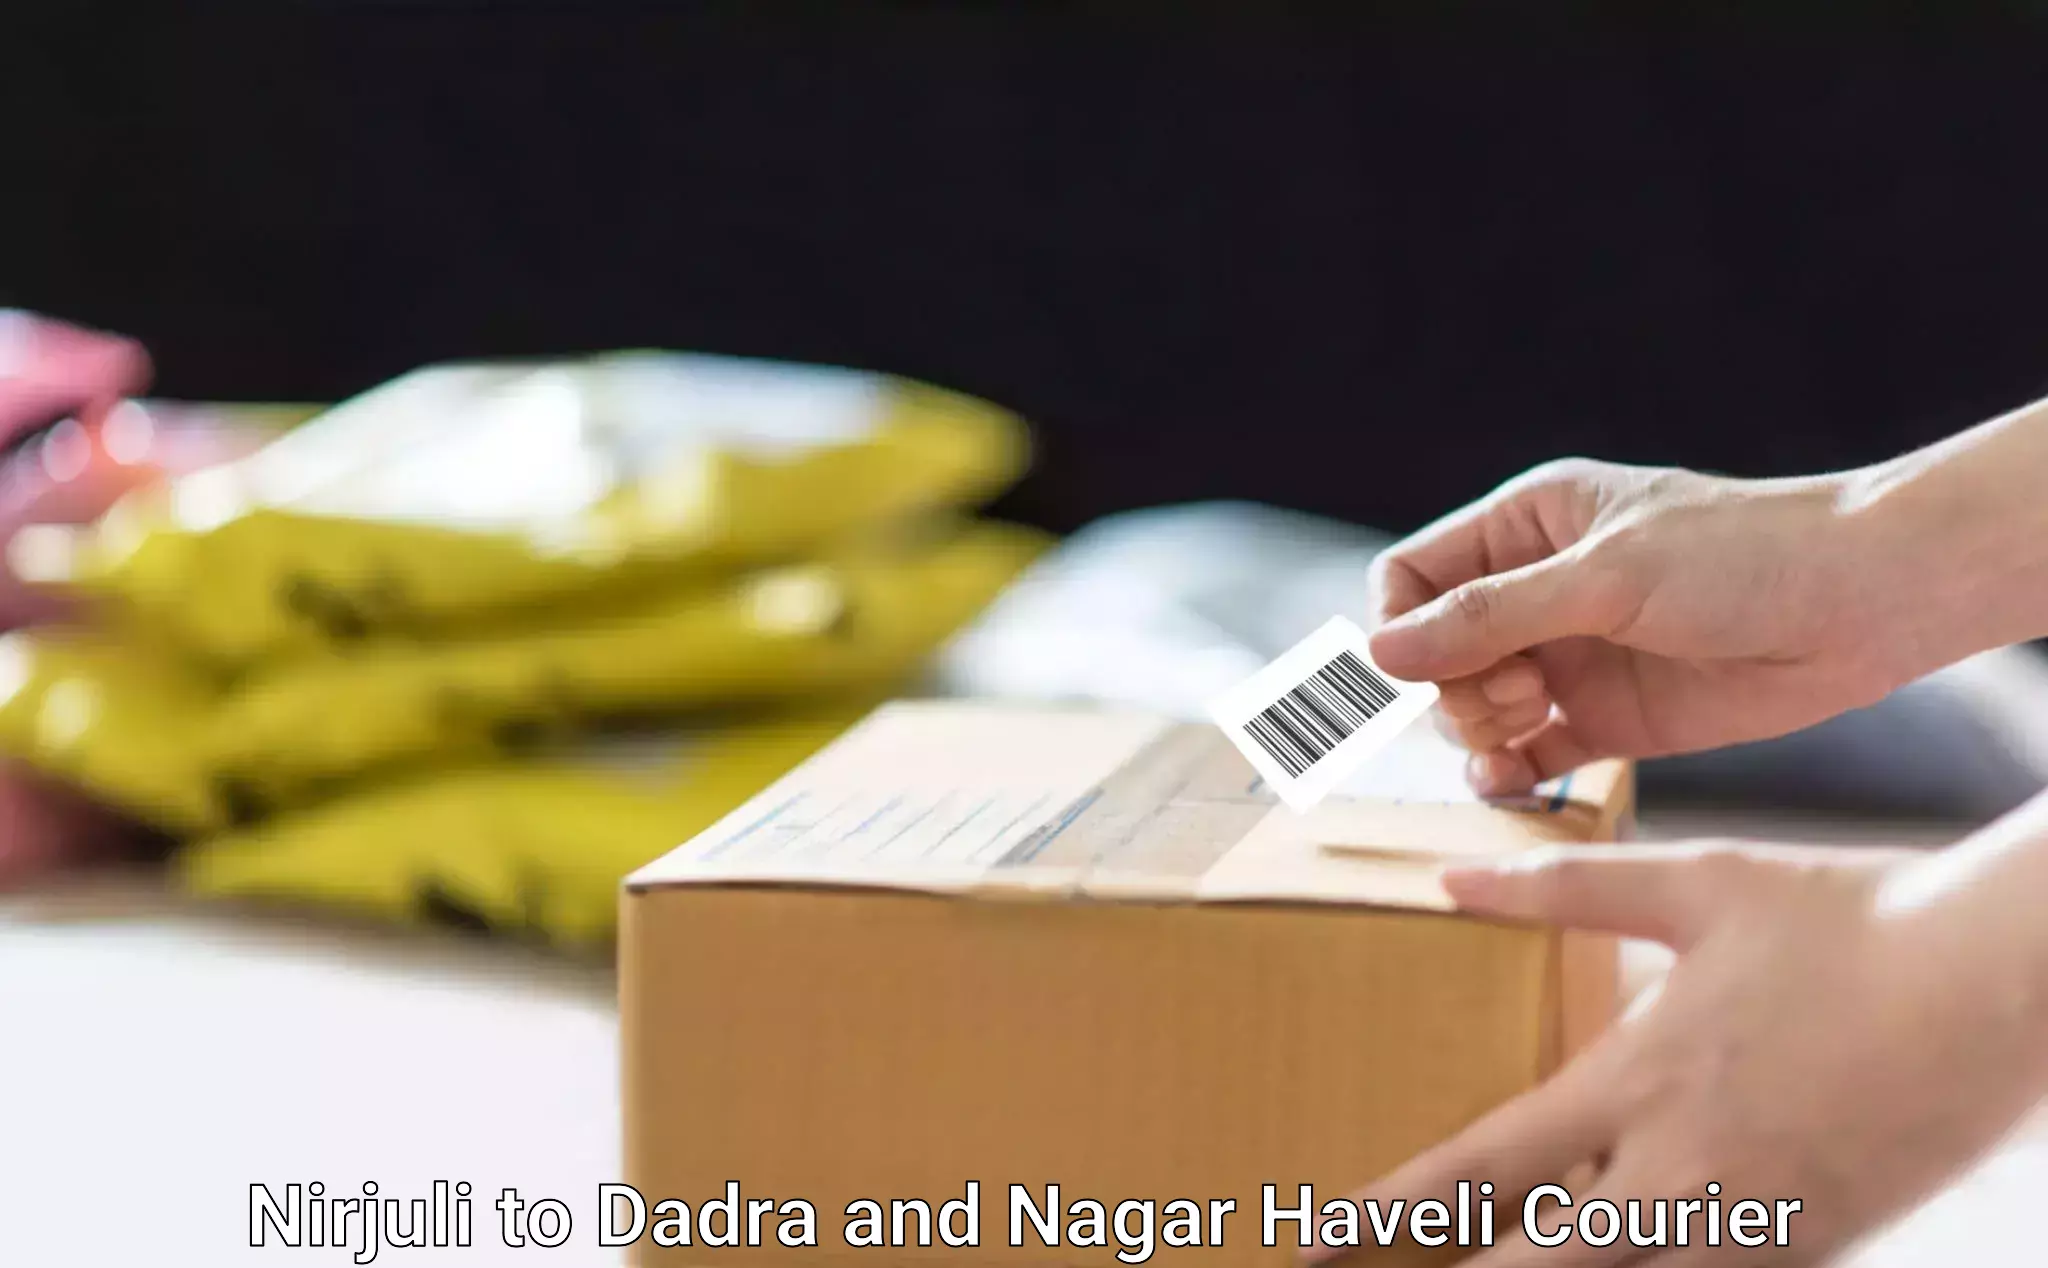 Courier service innovation Nirjuli to Dadra and Nagar Haveli